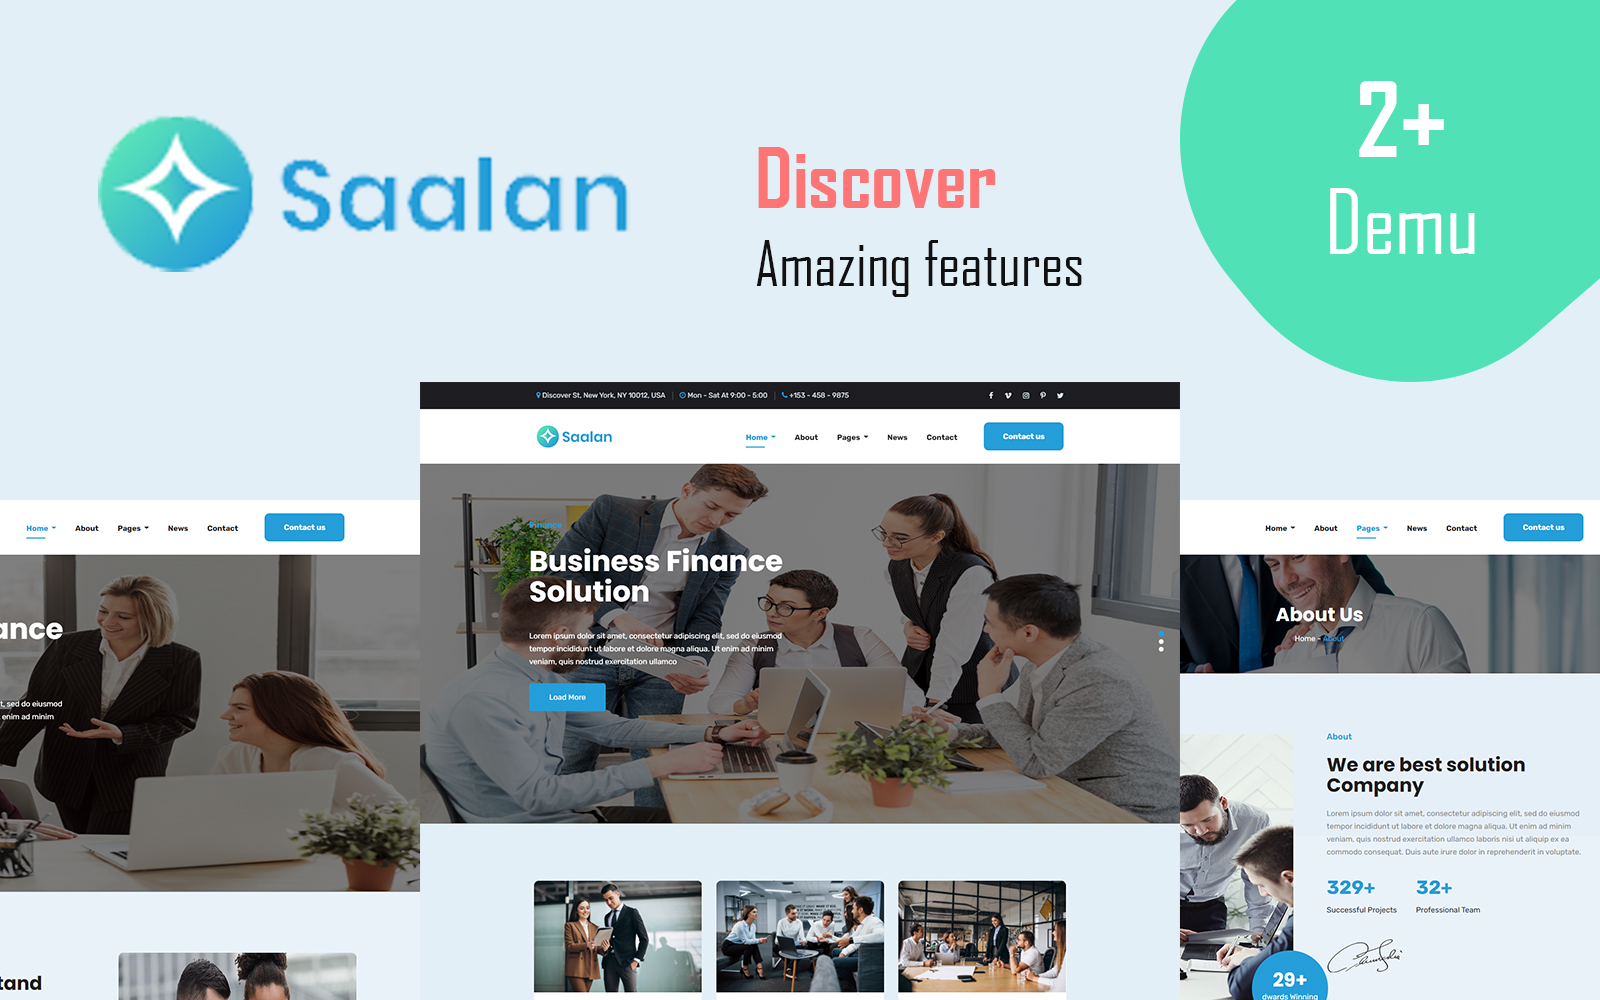 Saalan - Responsive Multipurpose Corporate Business Website Template